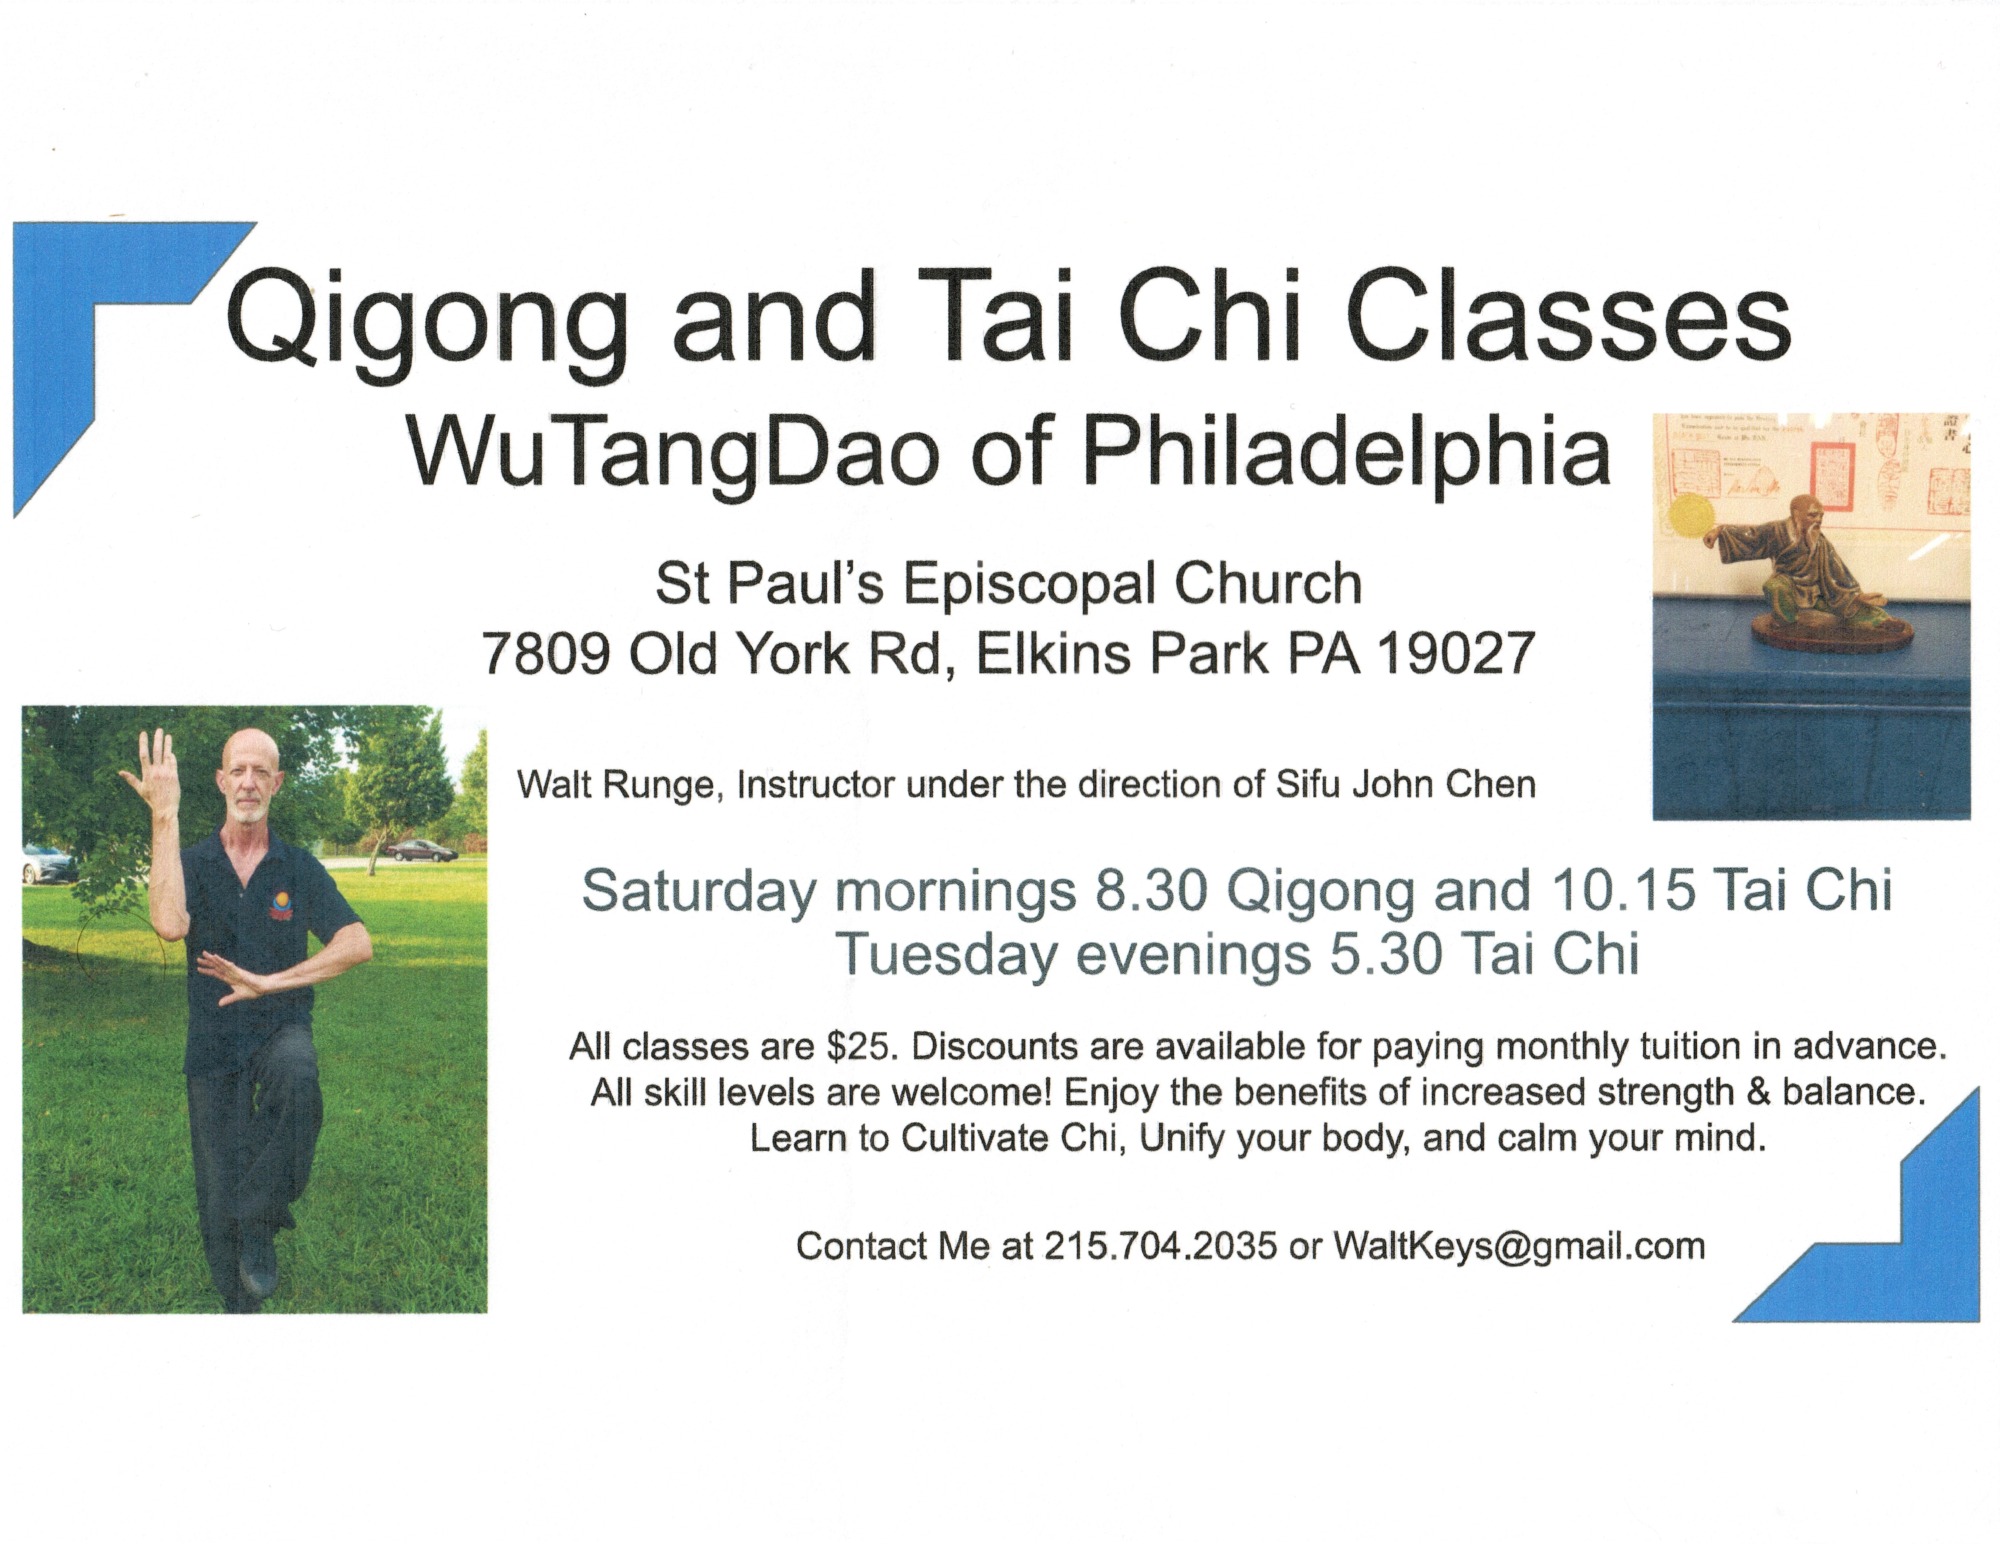 Tai Chi with Walt Runge @ St. Paul's Elkins Park